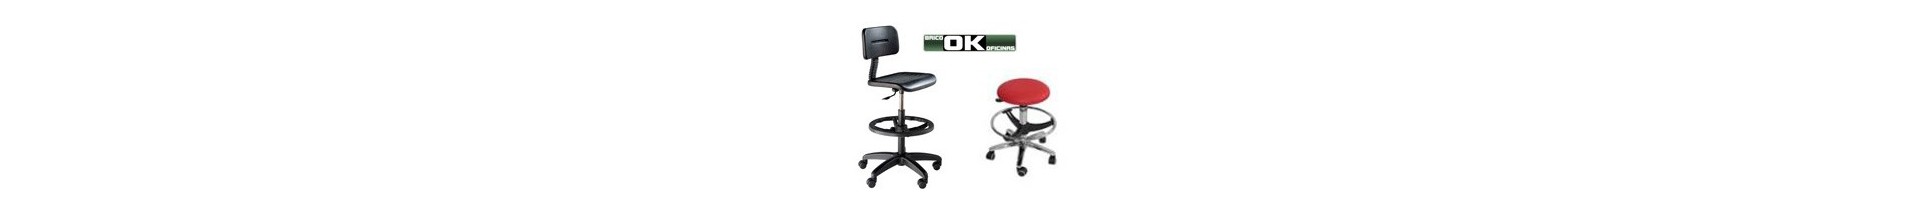 Work stools